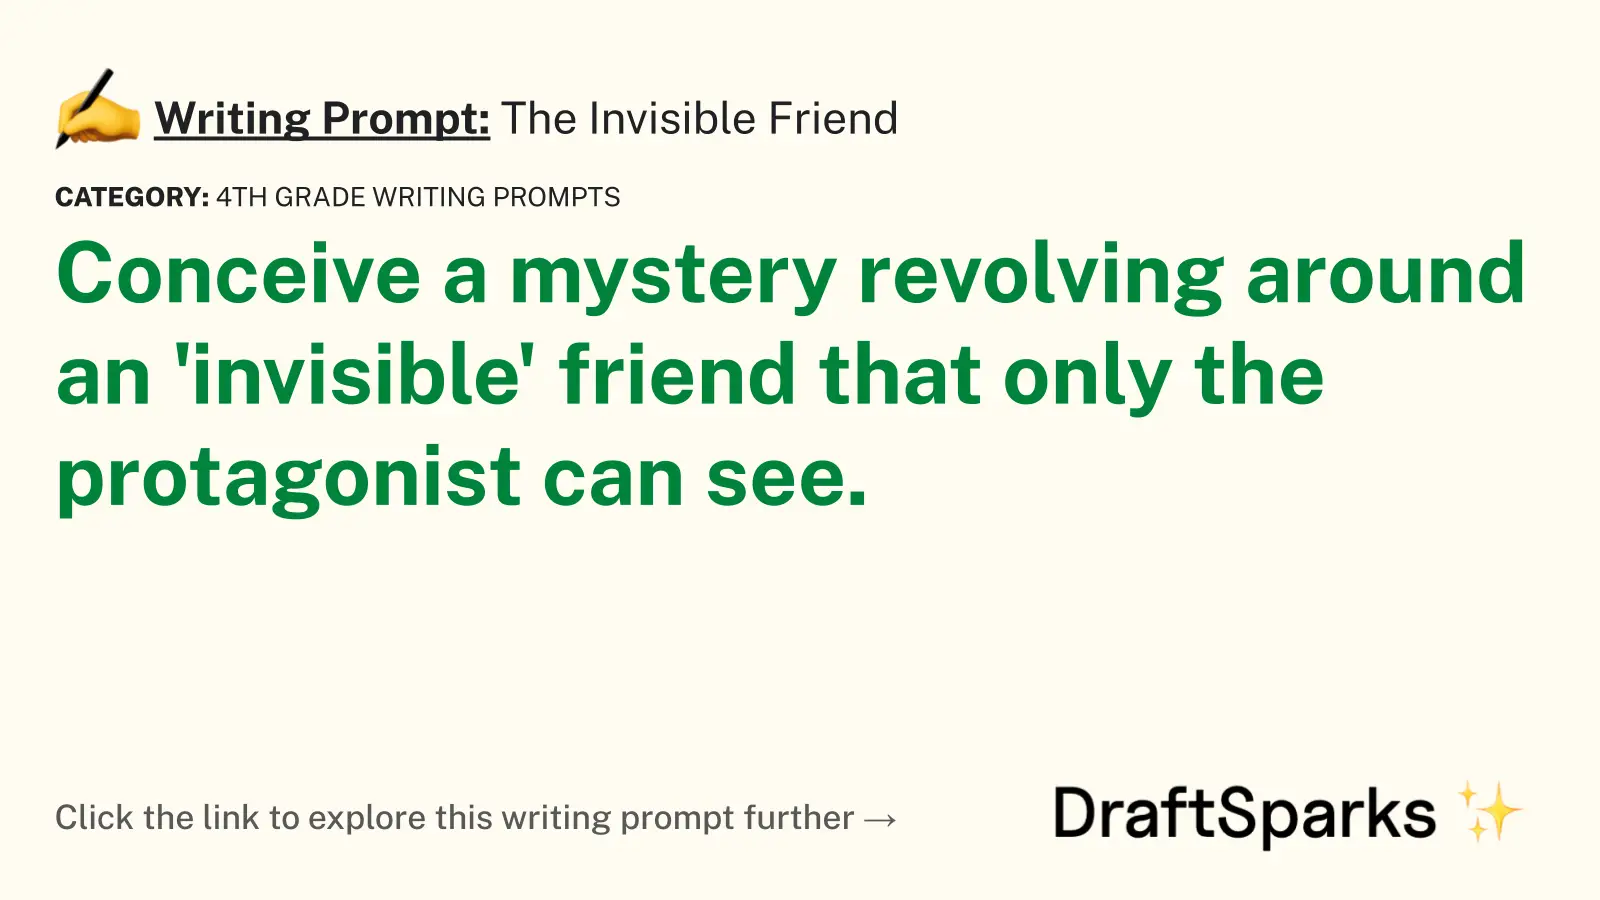 The Invisible Friend